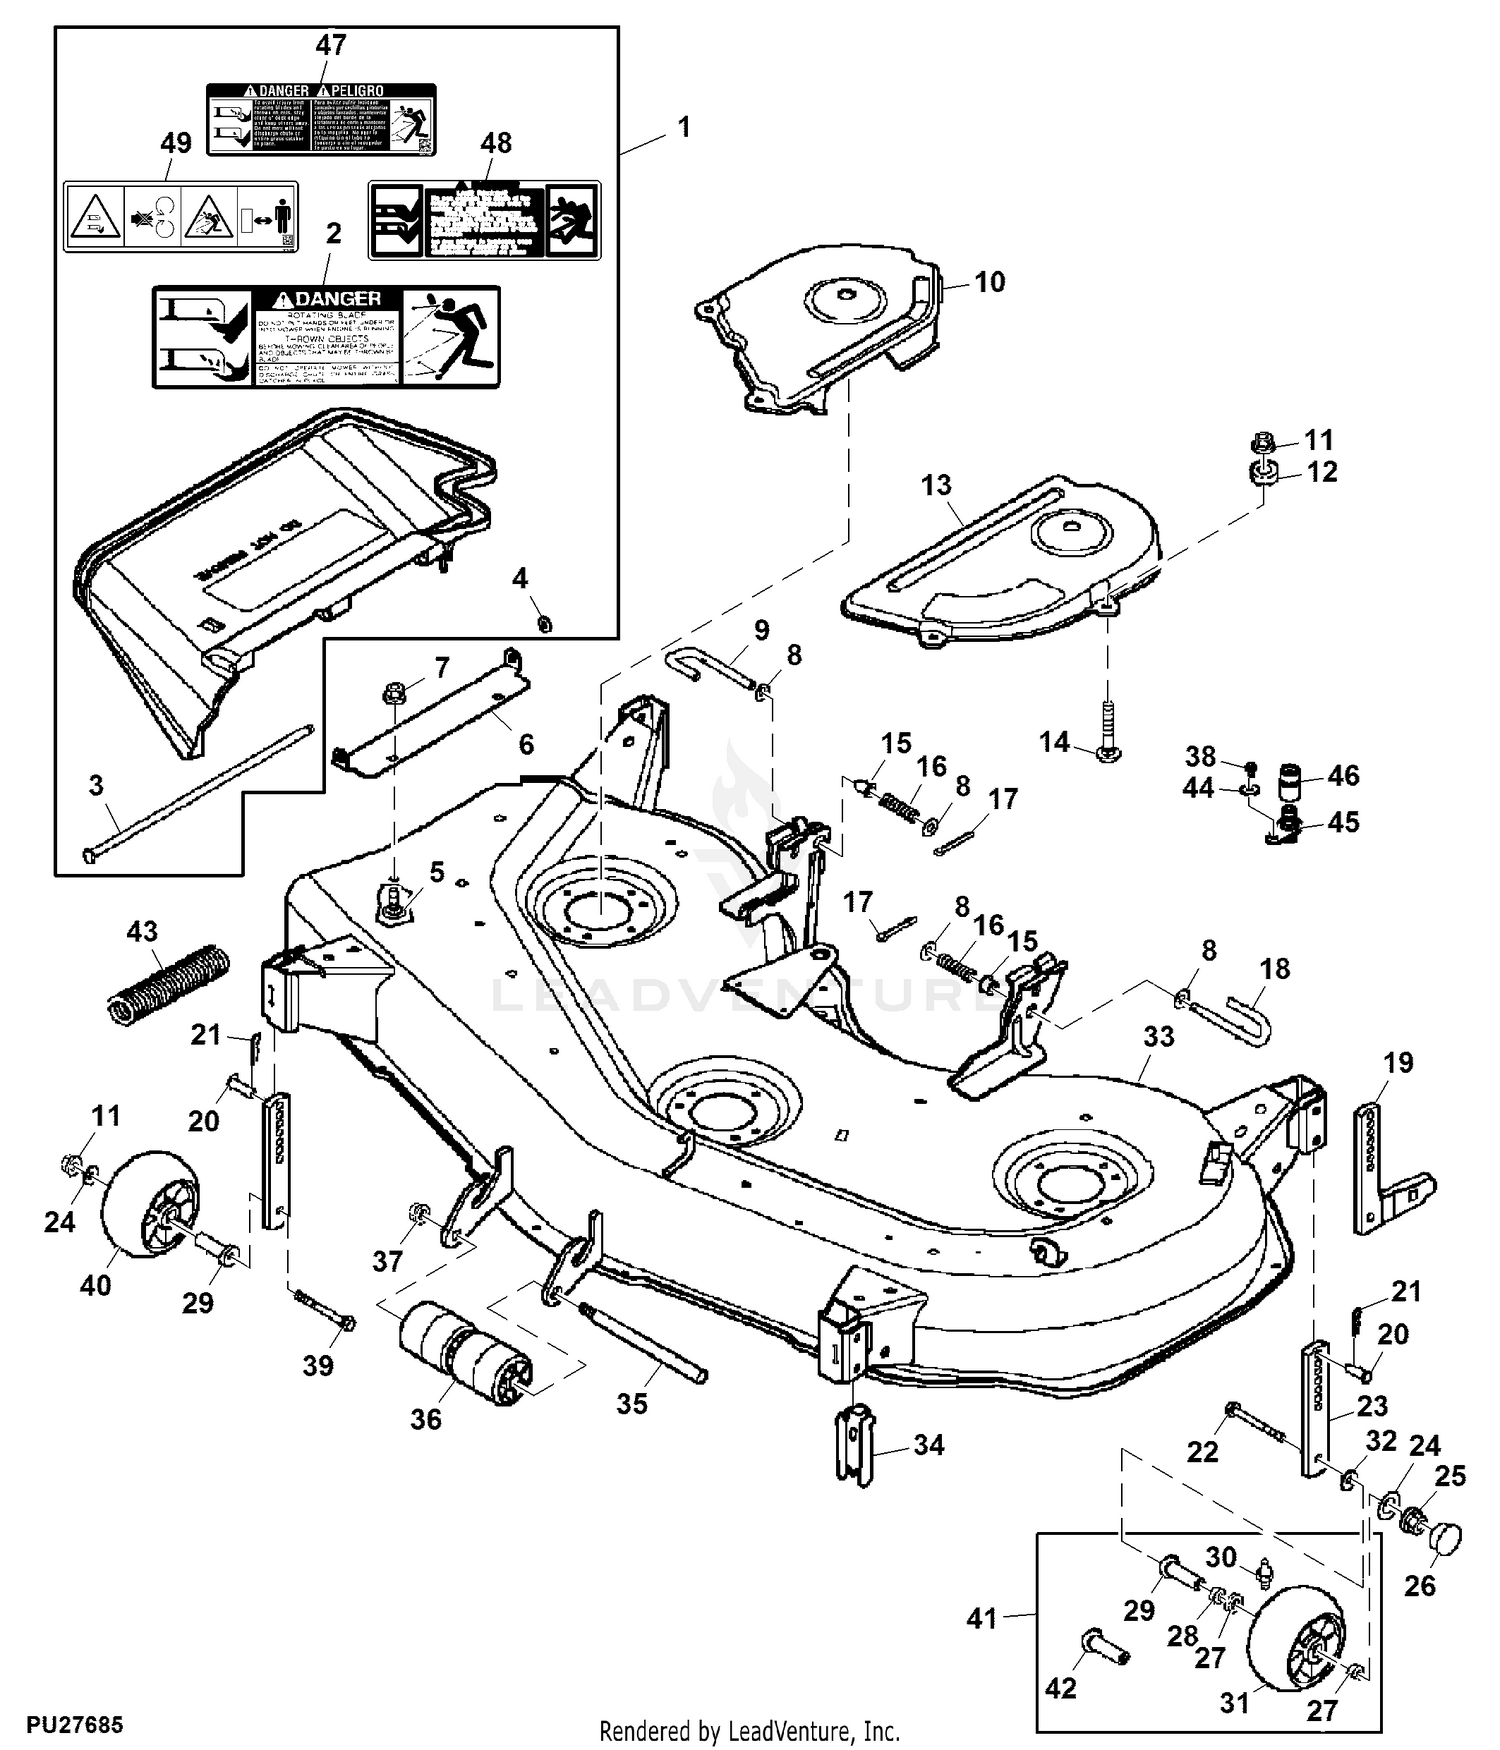 John Deere 48c Mower Deck Parts Diagram All In One Photos